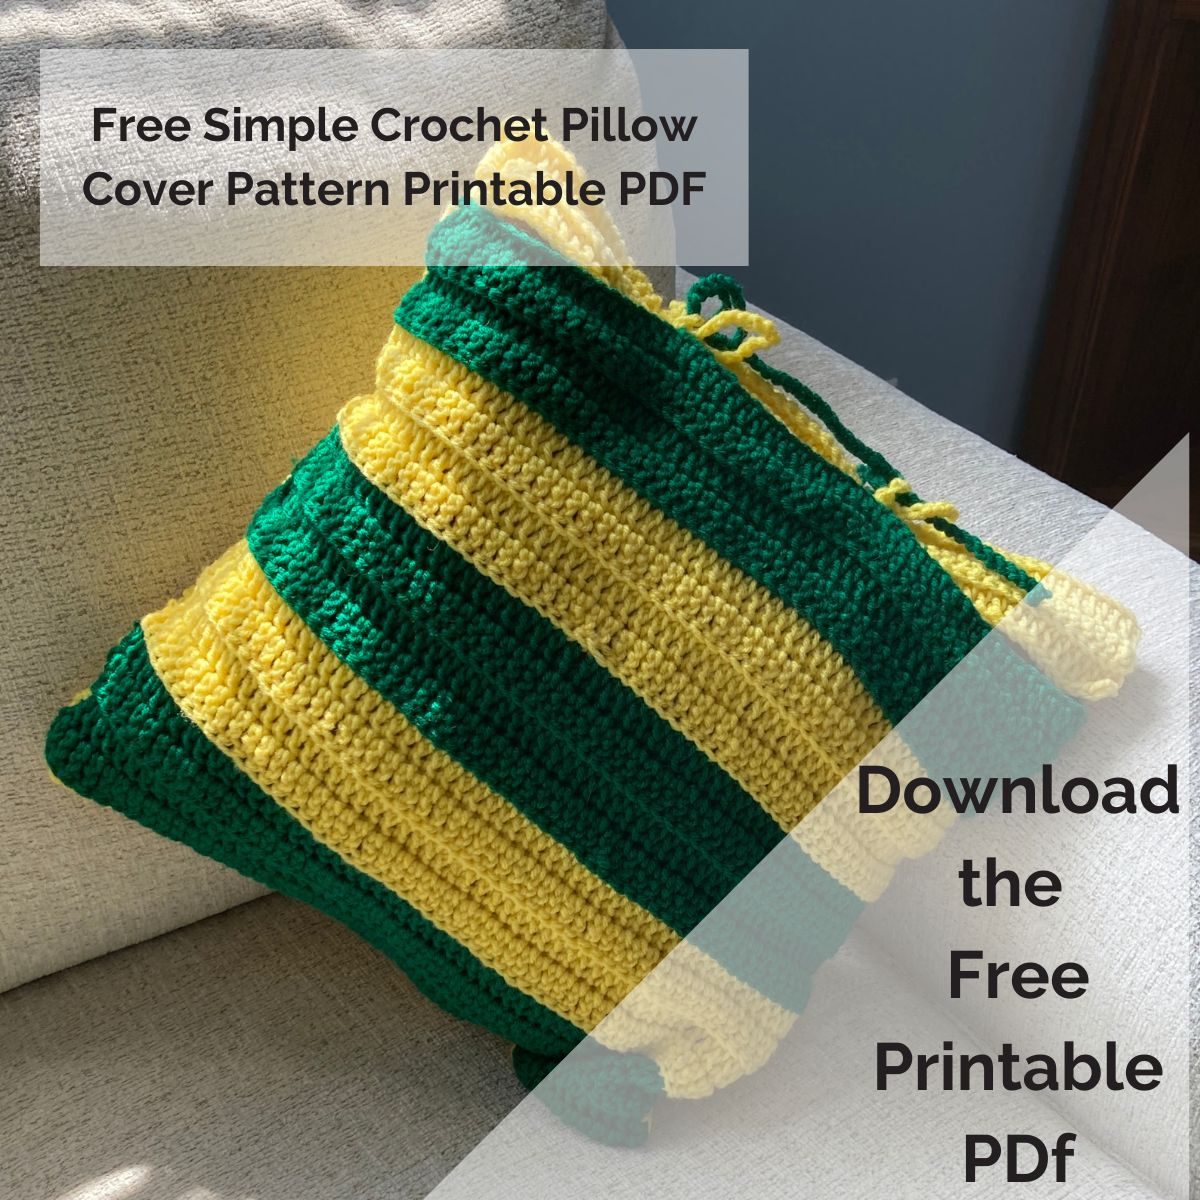 Free Simple Crochet Pillow Cover Pattern Printable PDF